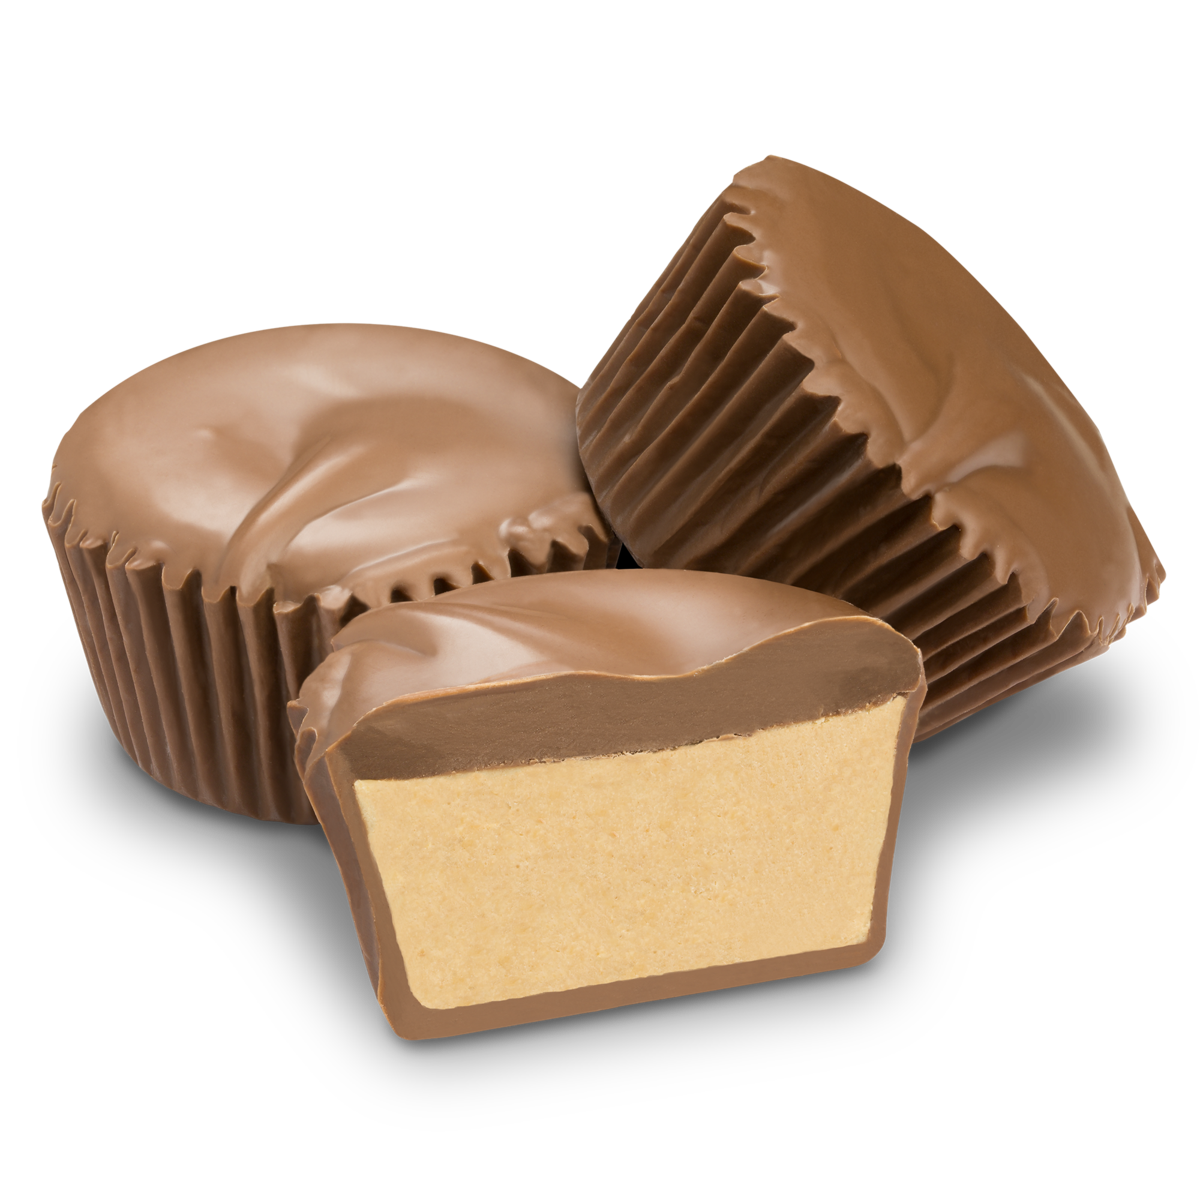 M&M's Peanut Milk Chocolate Candy, 3.4 Oz. 